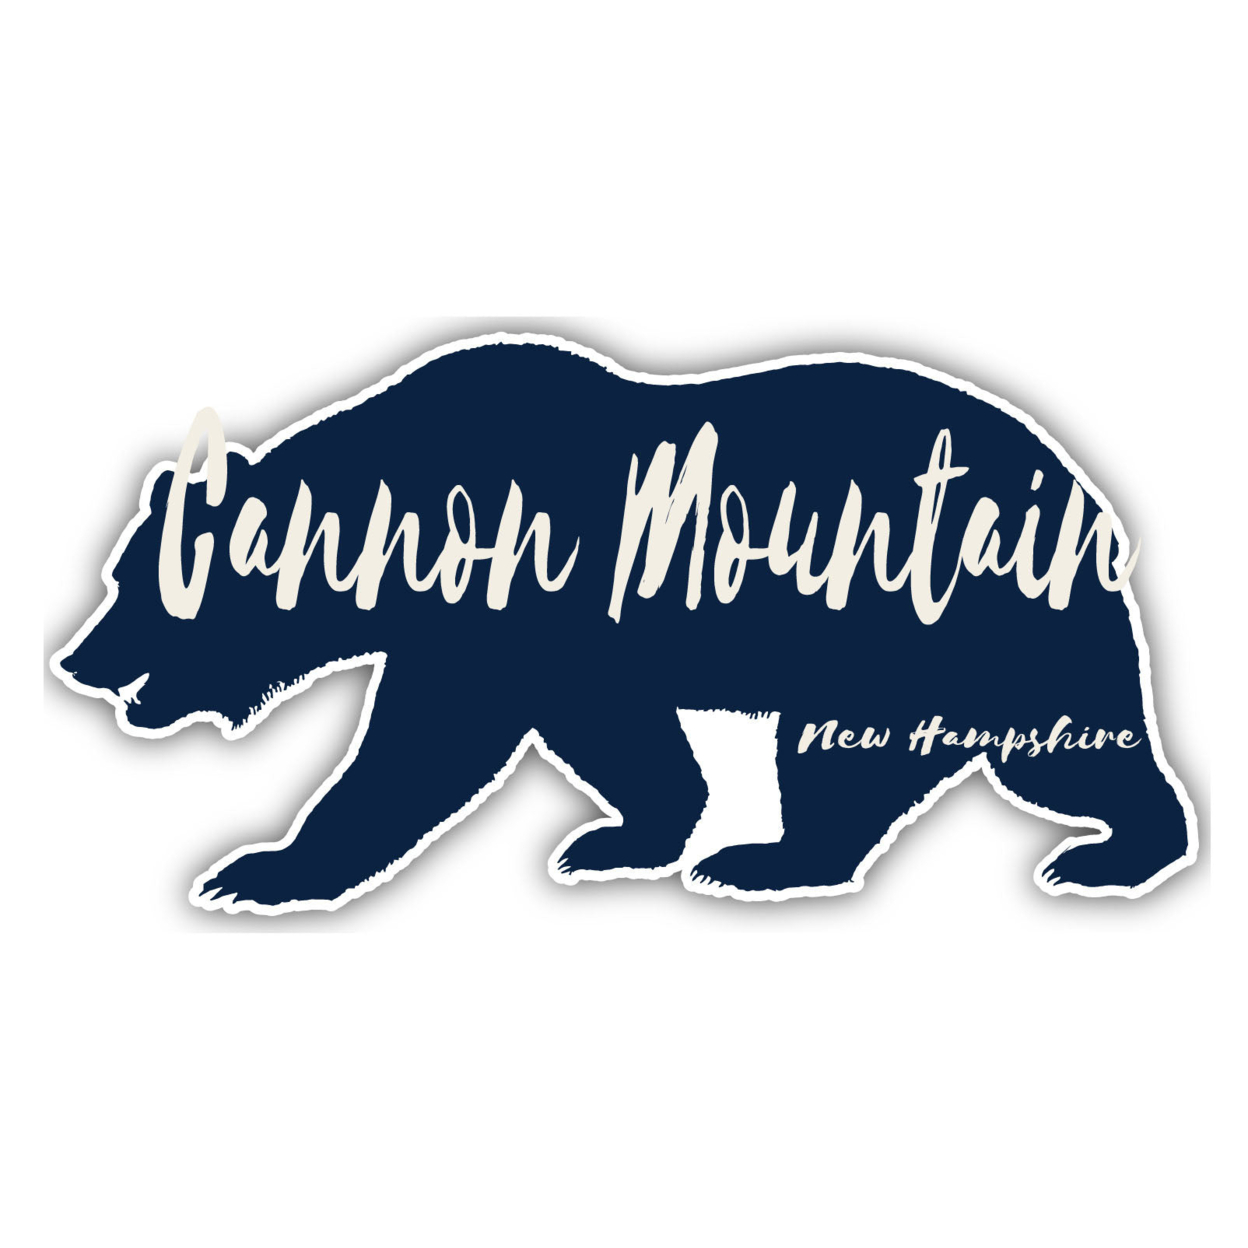 Cannon Mountain New Hampshire Souvenir Decorative Stickers (Choose Theme And Size) - Single Unit, 2-Inch, Bear